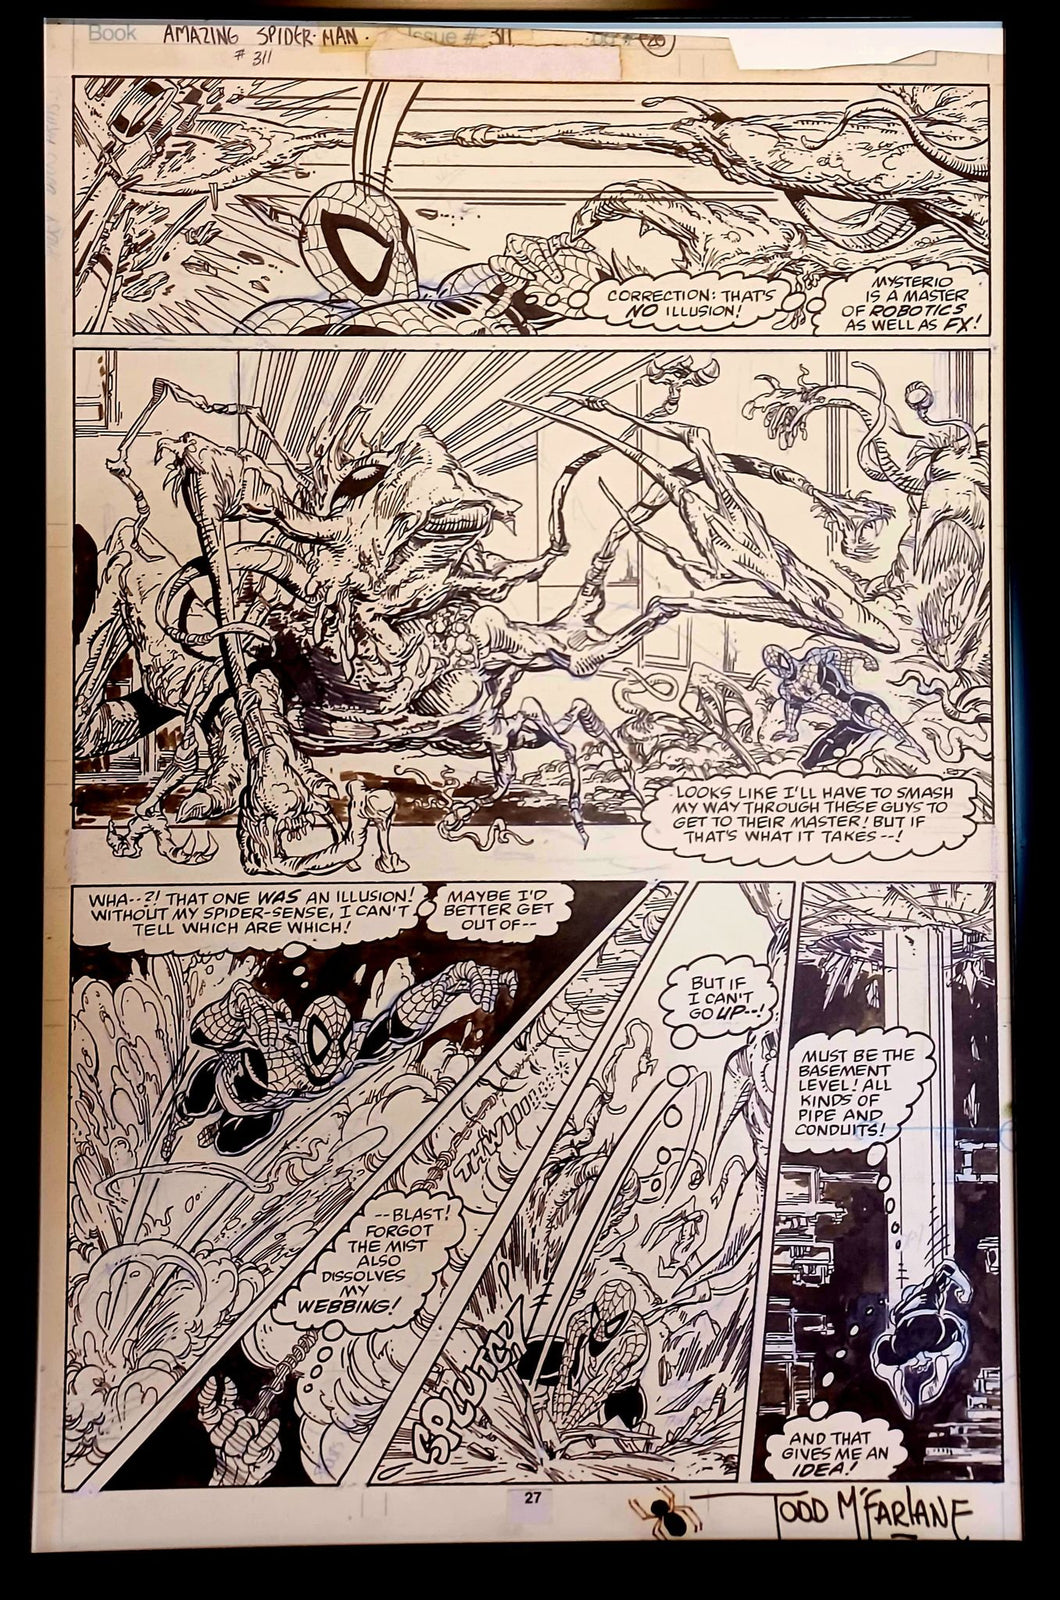 Amazing Spider-Man #311 pg. 20 by Todd McFarlane 11x17 FRAMED Original Art Print Comic Poster